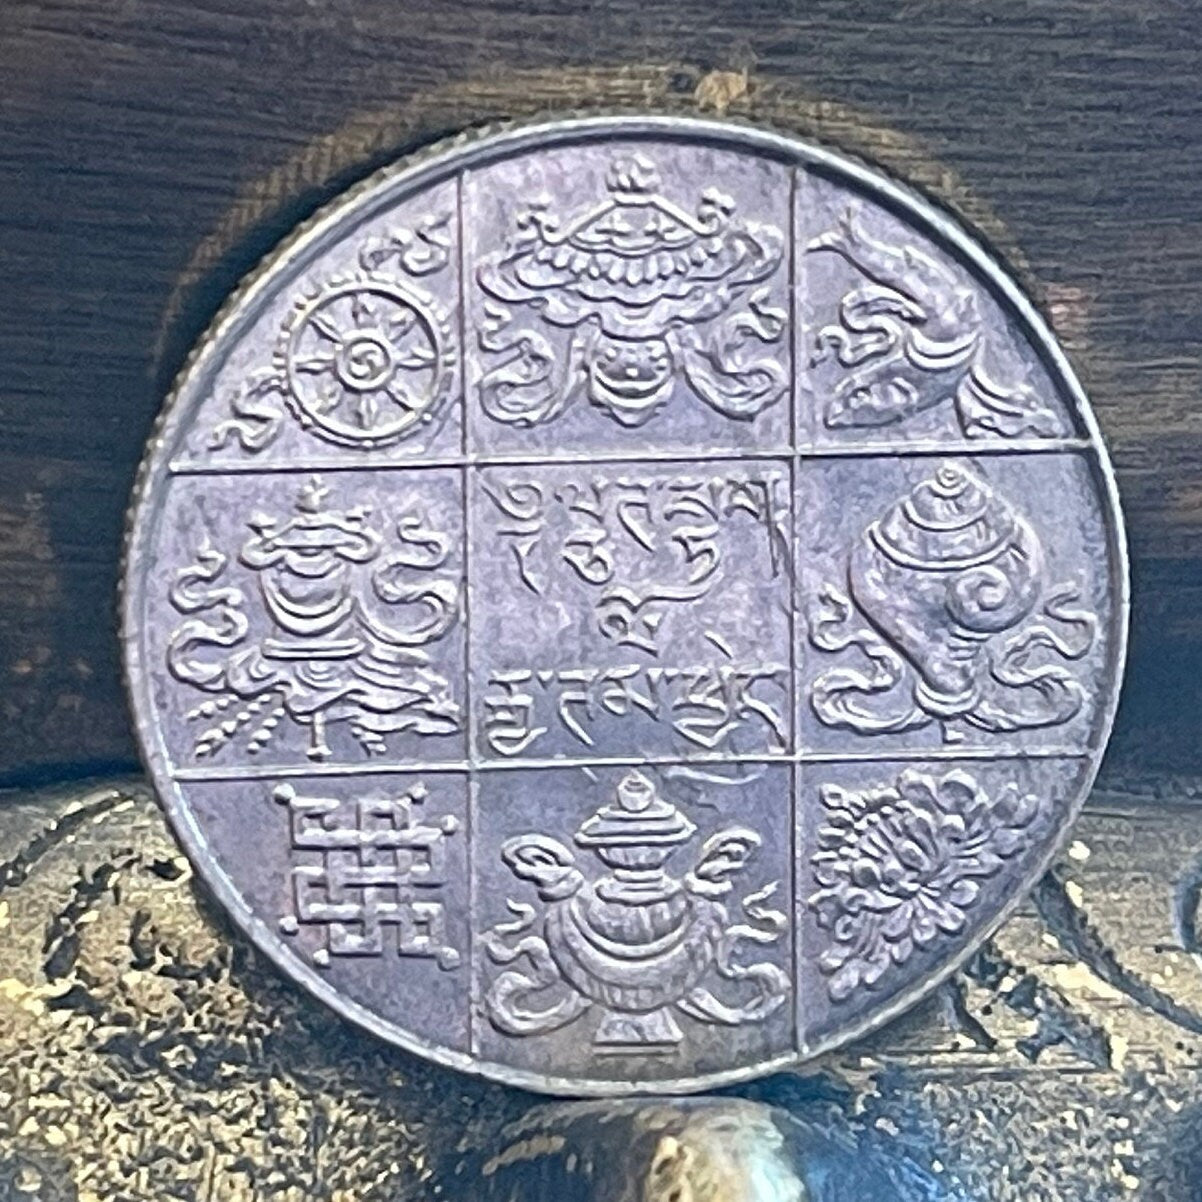 King Jigme Dorji Wangchuck & Buddhist Symbols 1/2 Rupee Bhutan Authentic Coin Money for Jewelry and Craft Making